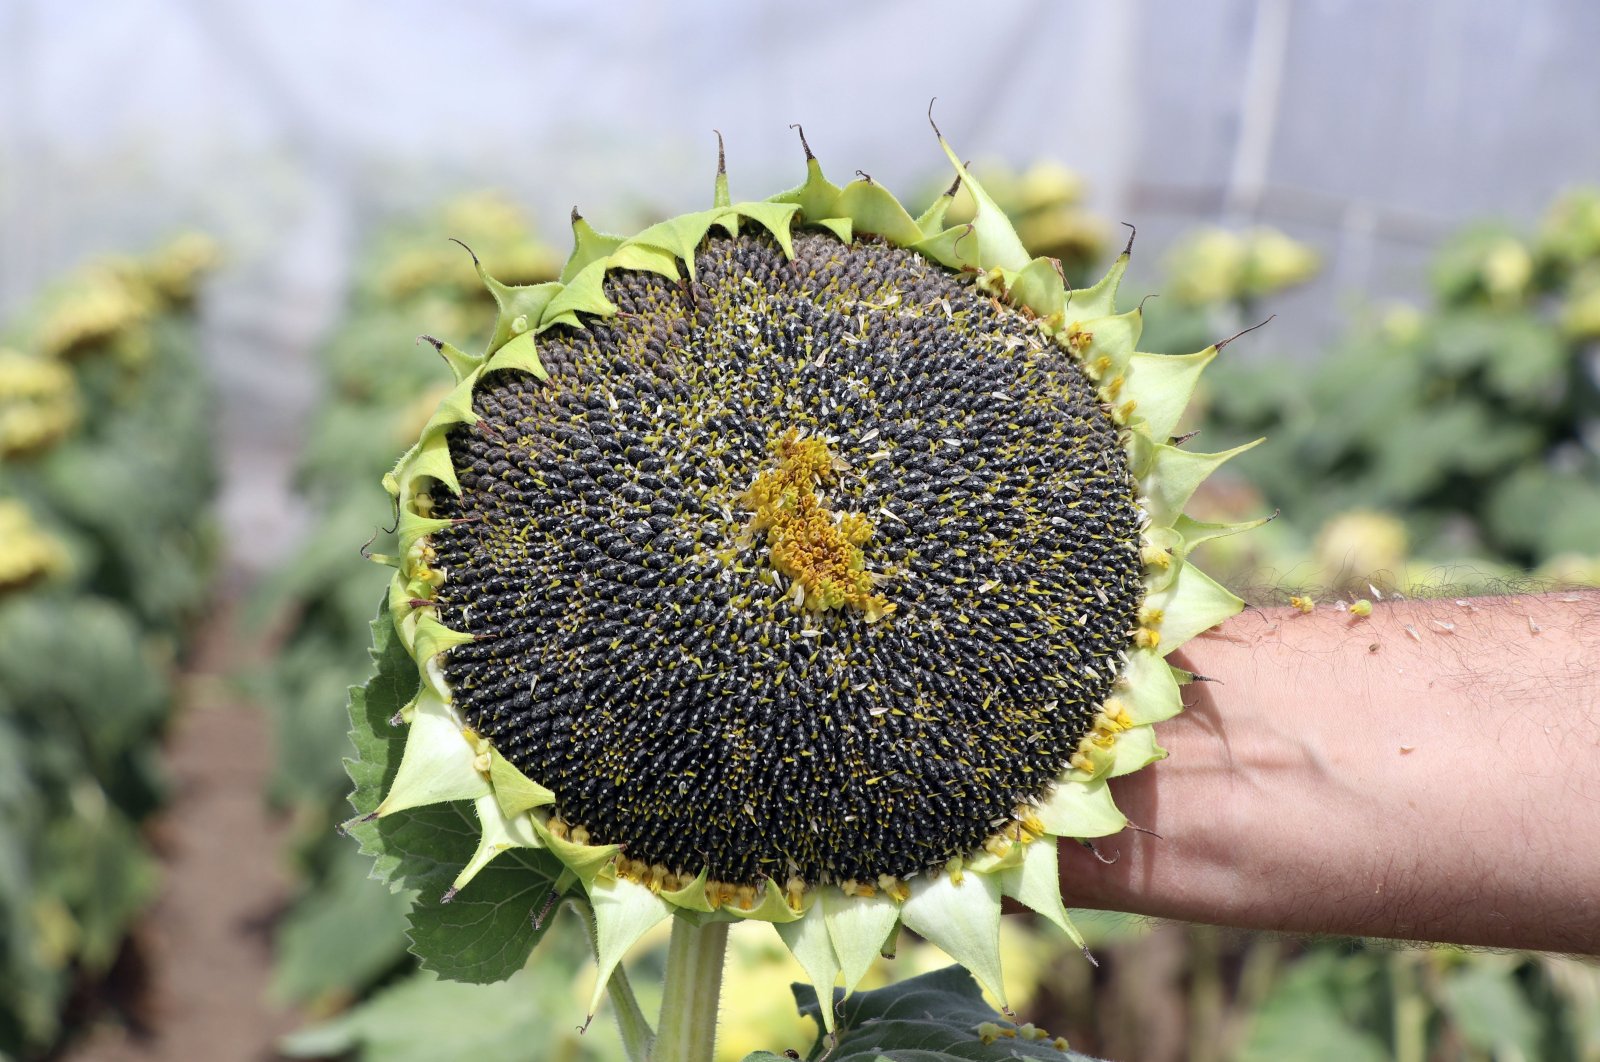 Türkiye’s Edirne yields hybrid sunflower resistant to drought